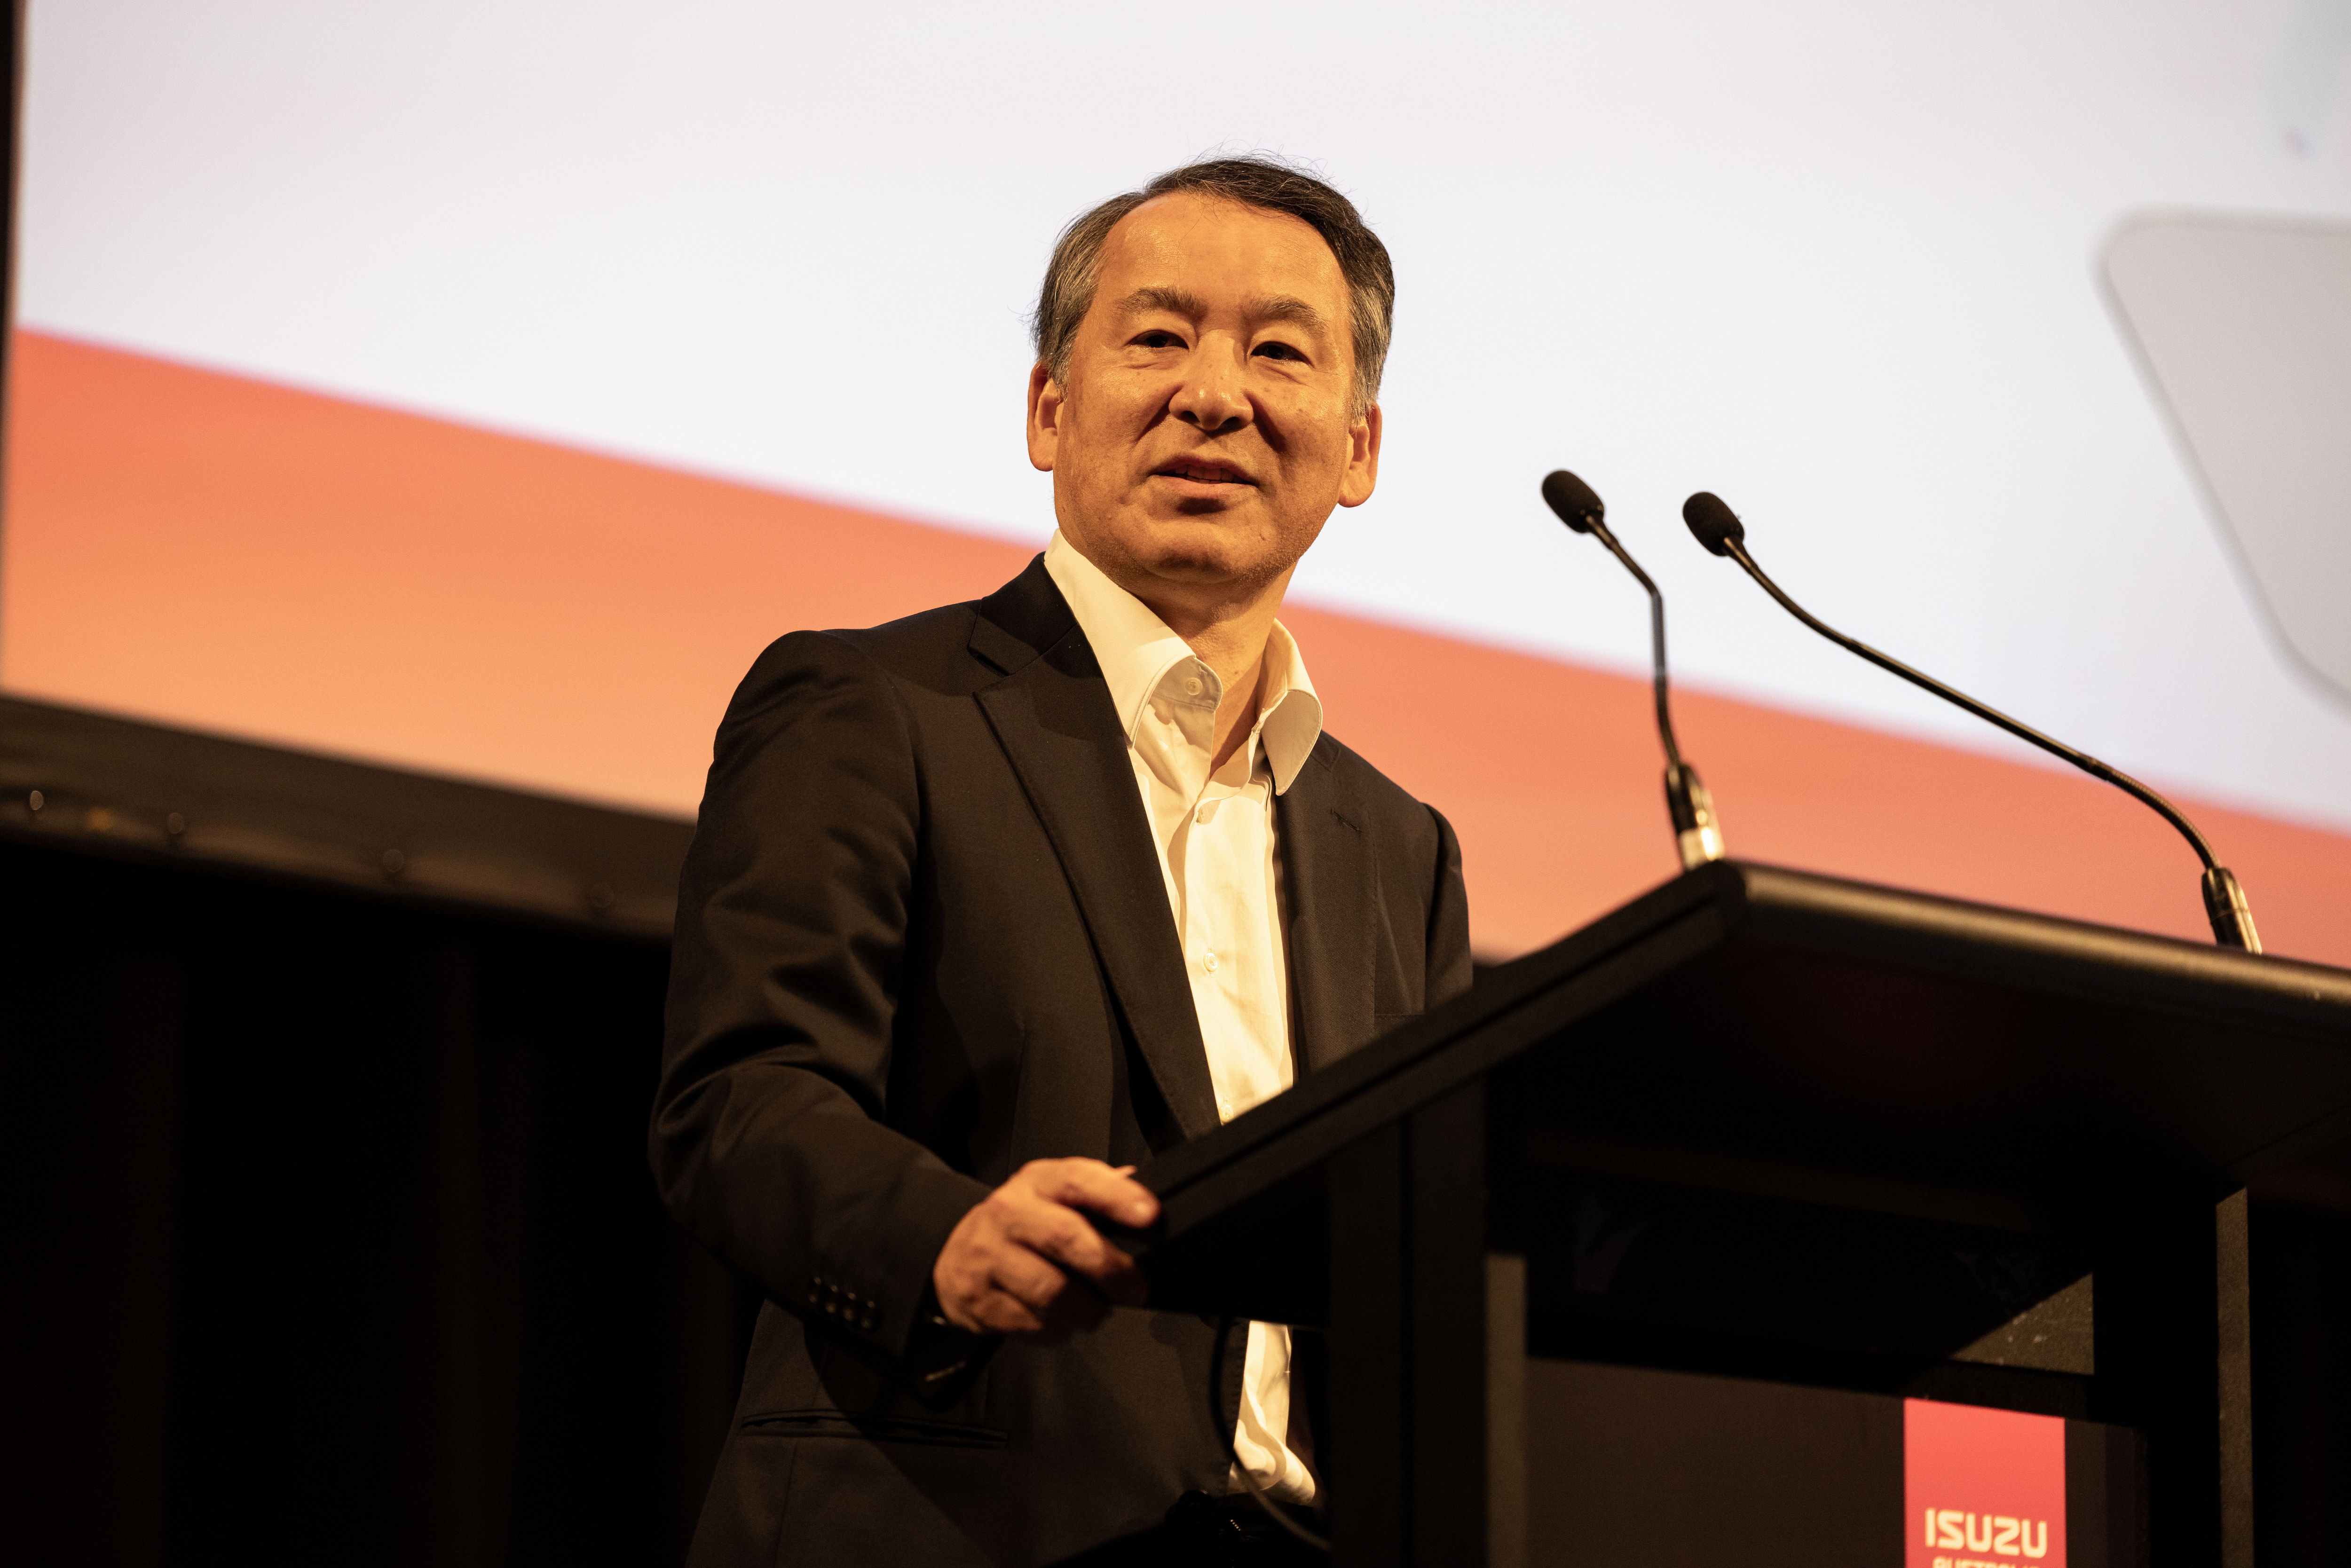 Mr Shinsuke Minami at the IAL National Dealer Meeting in Sydney